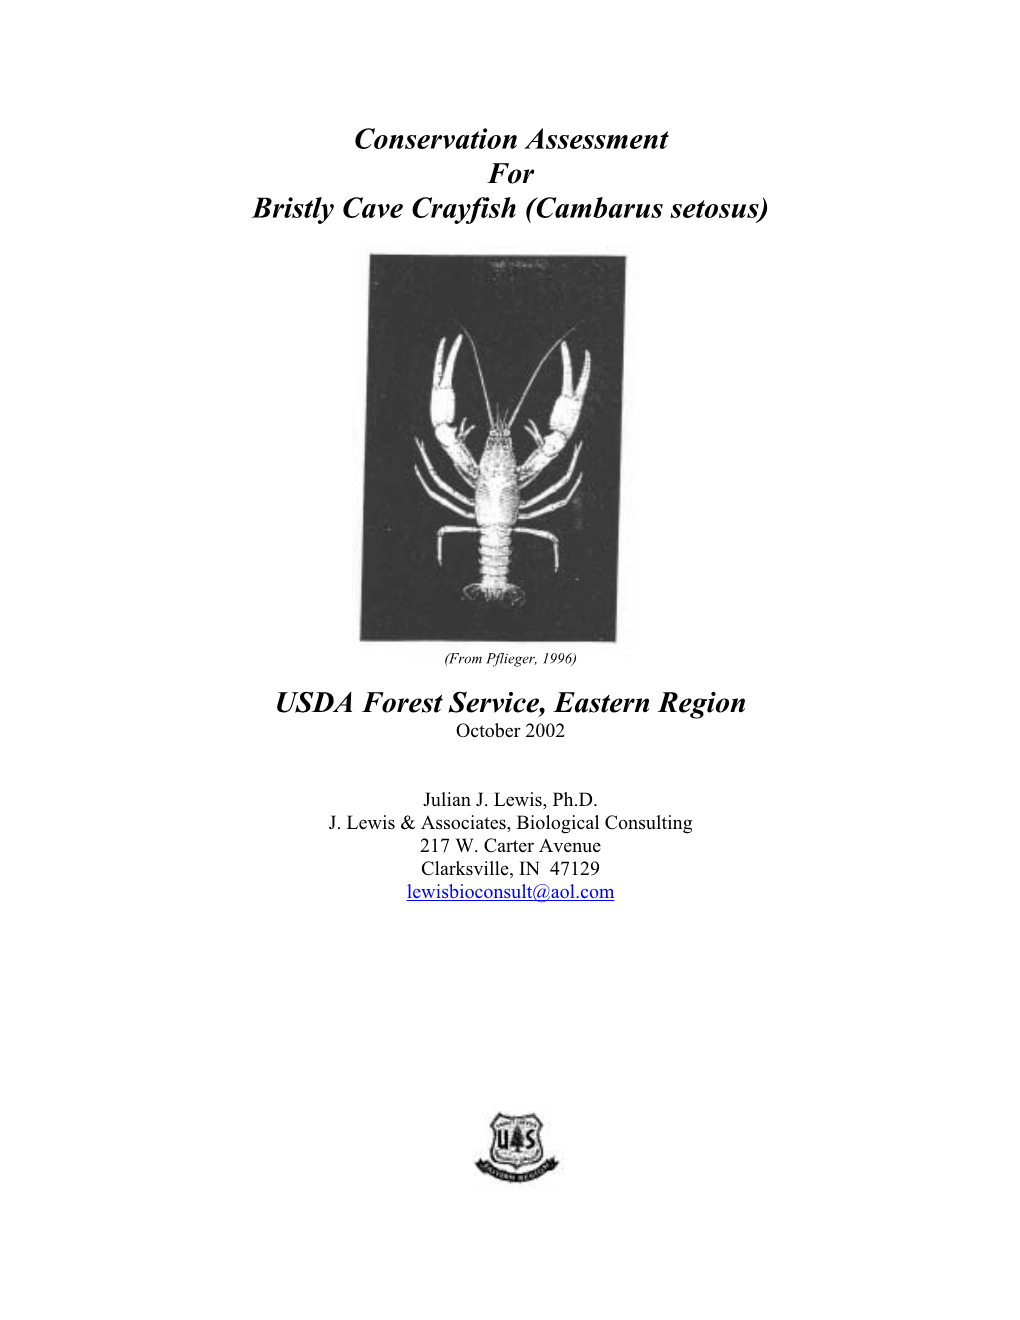 Bristly Cave Crayfish (Cambarus Setosus)